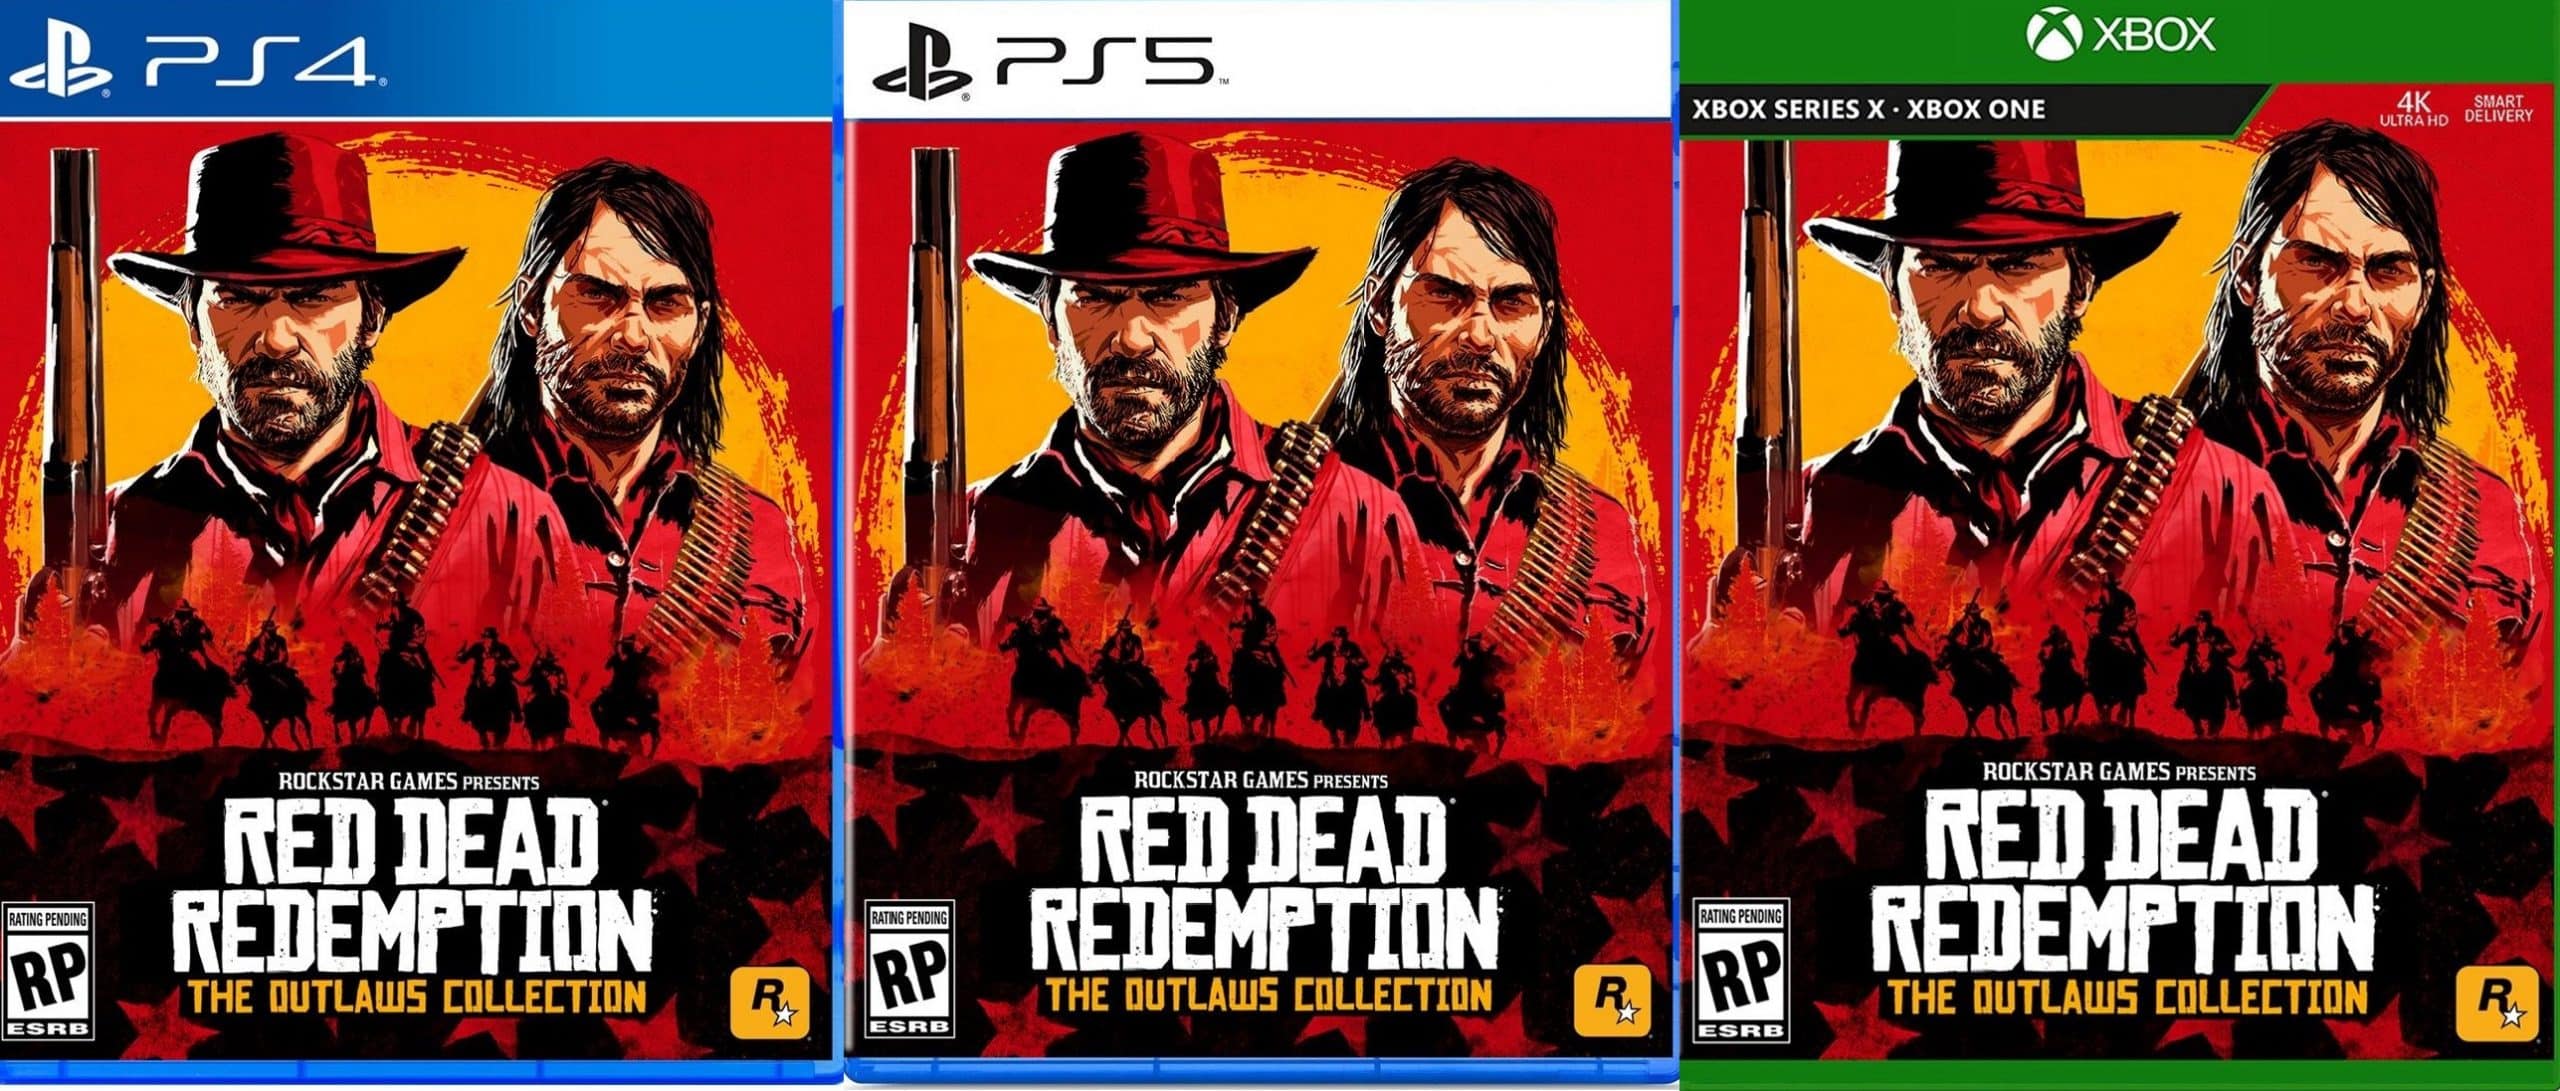 Red dead redemption series